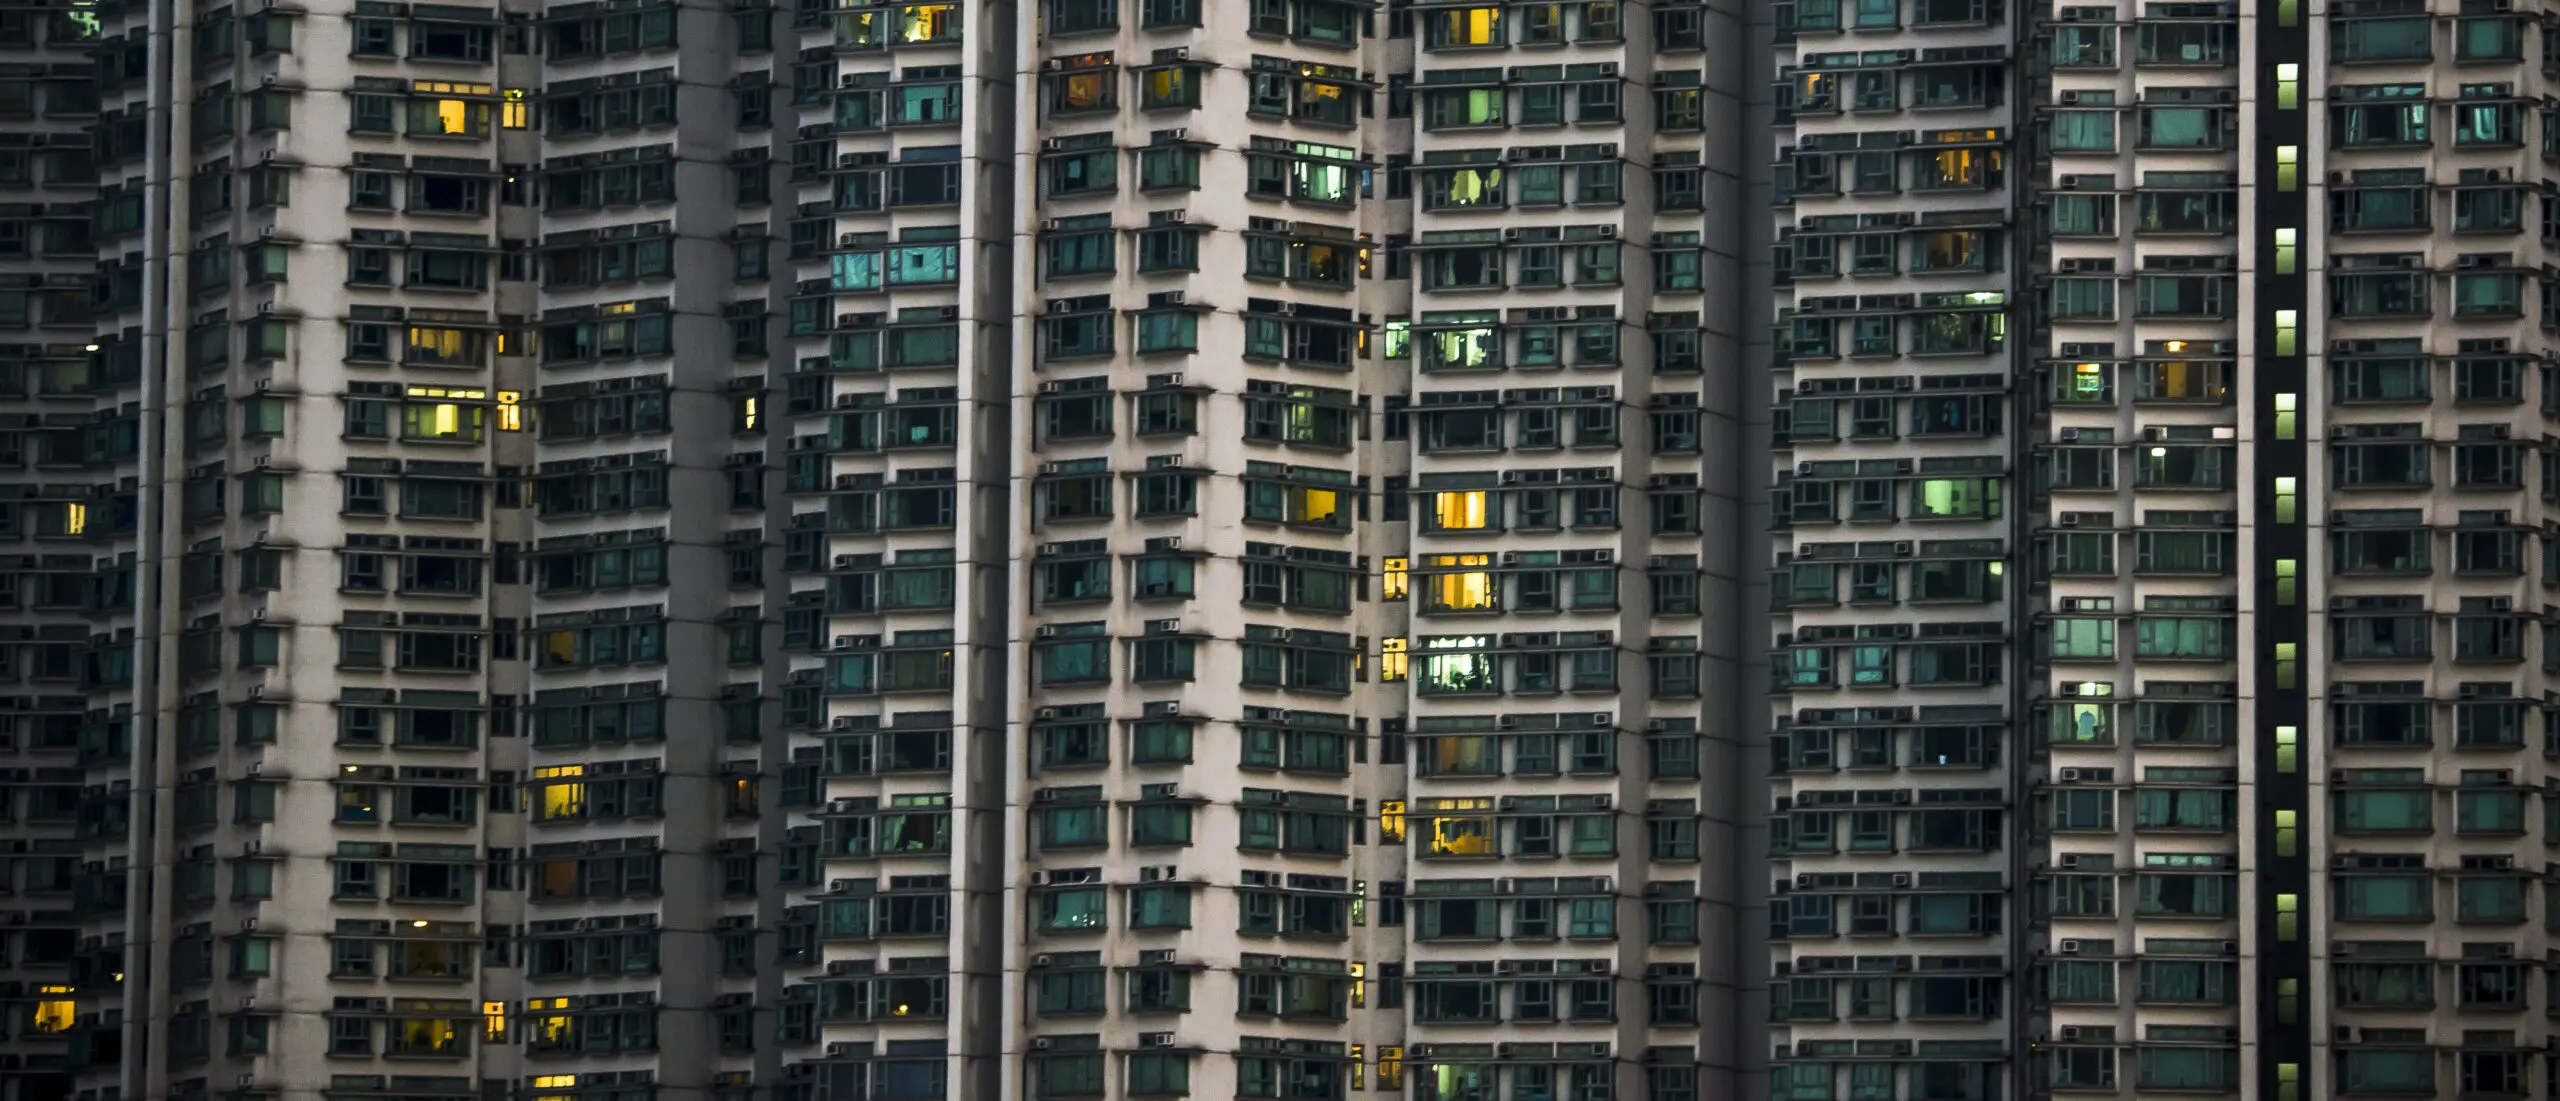 Wandbild (2057) Hamsterkäfig Hongkong präsentiert: Details und Strukturen,Architektur